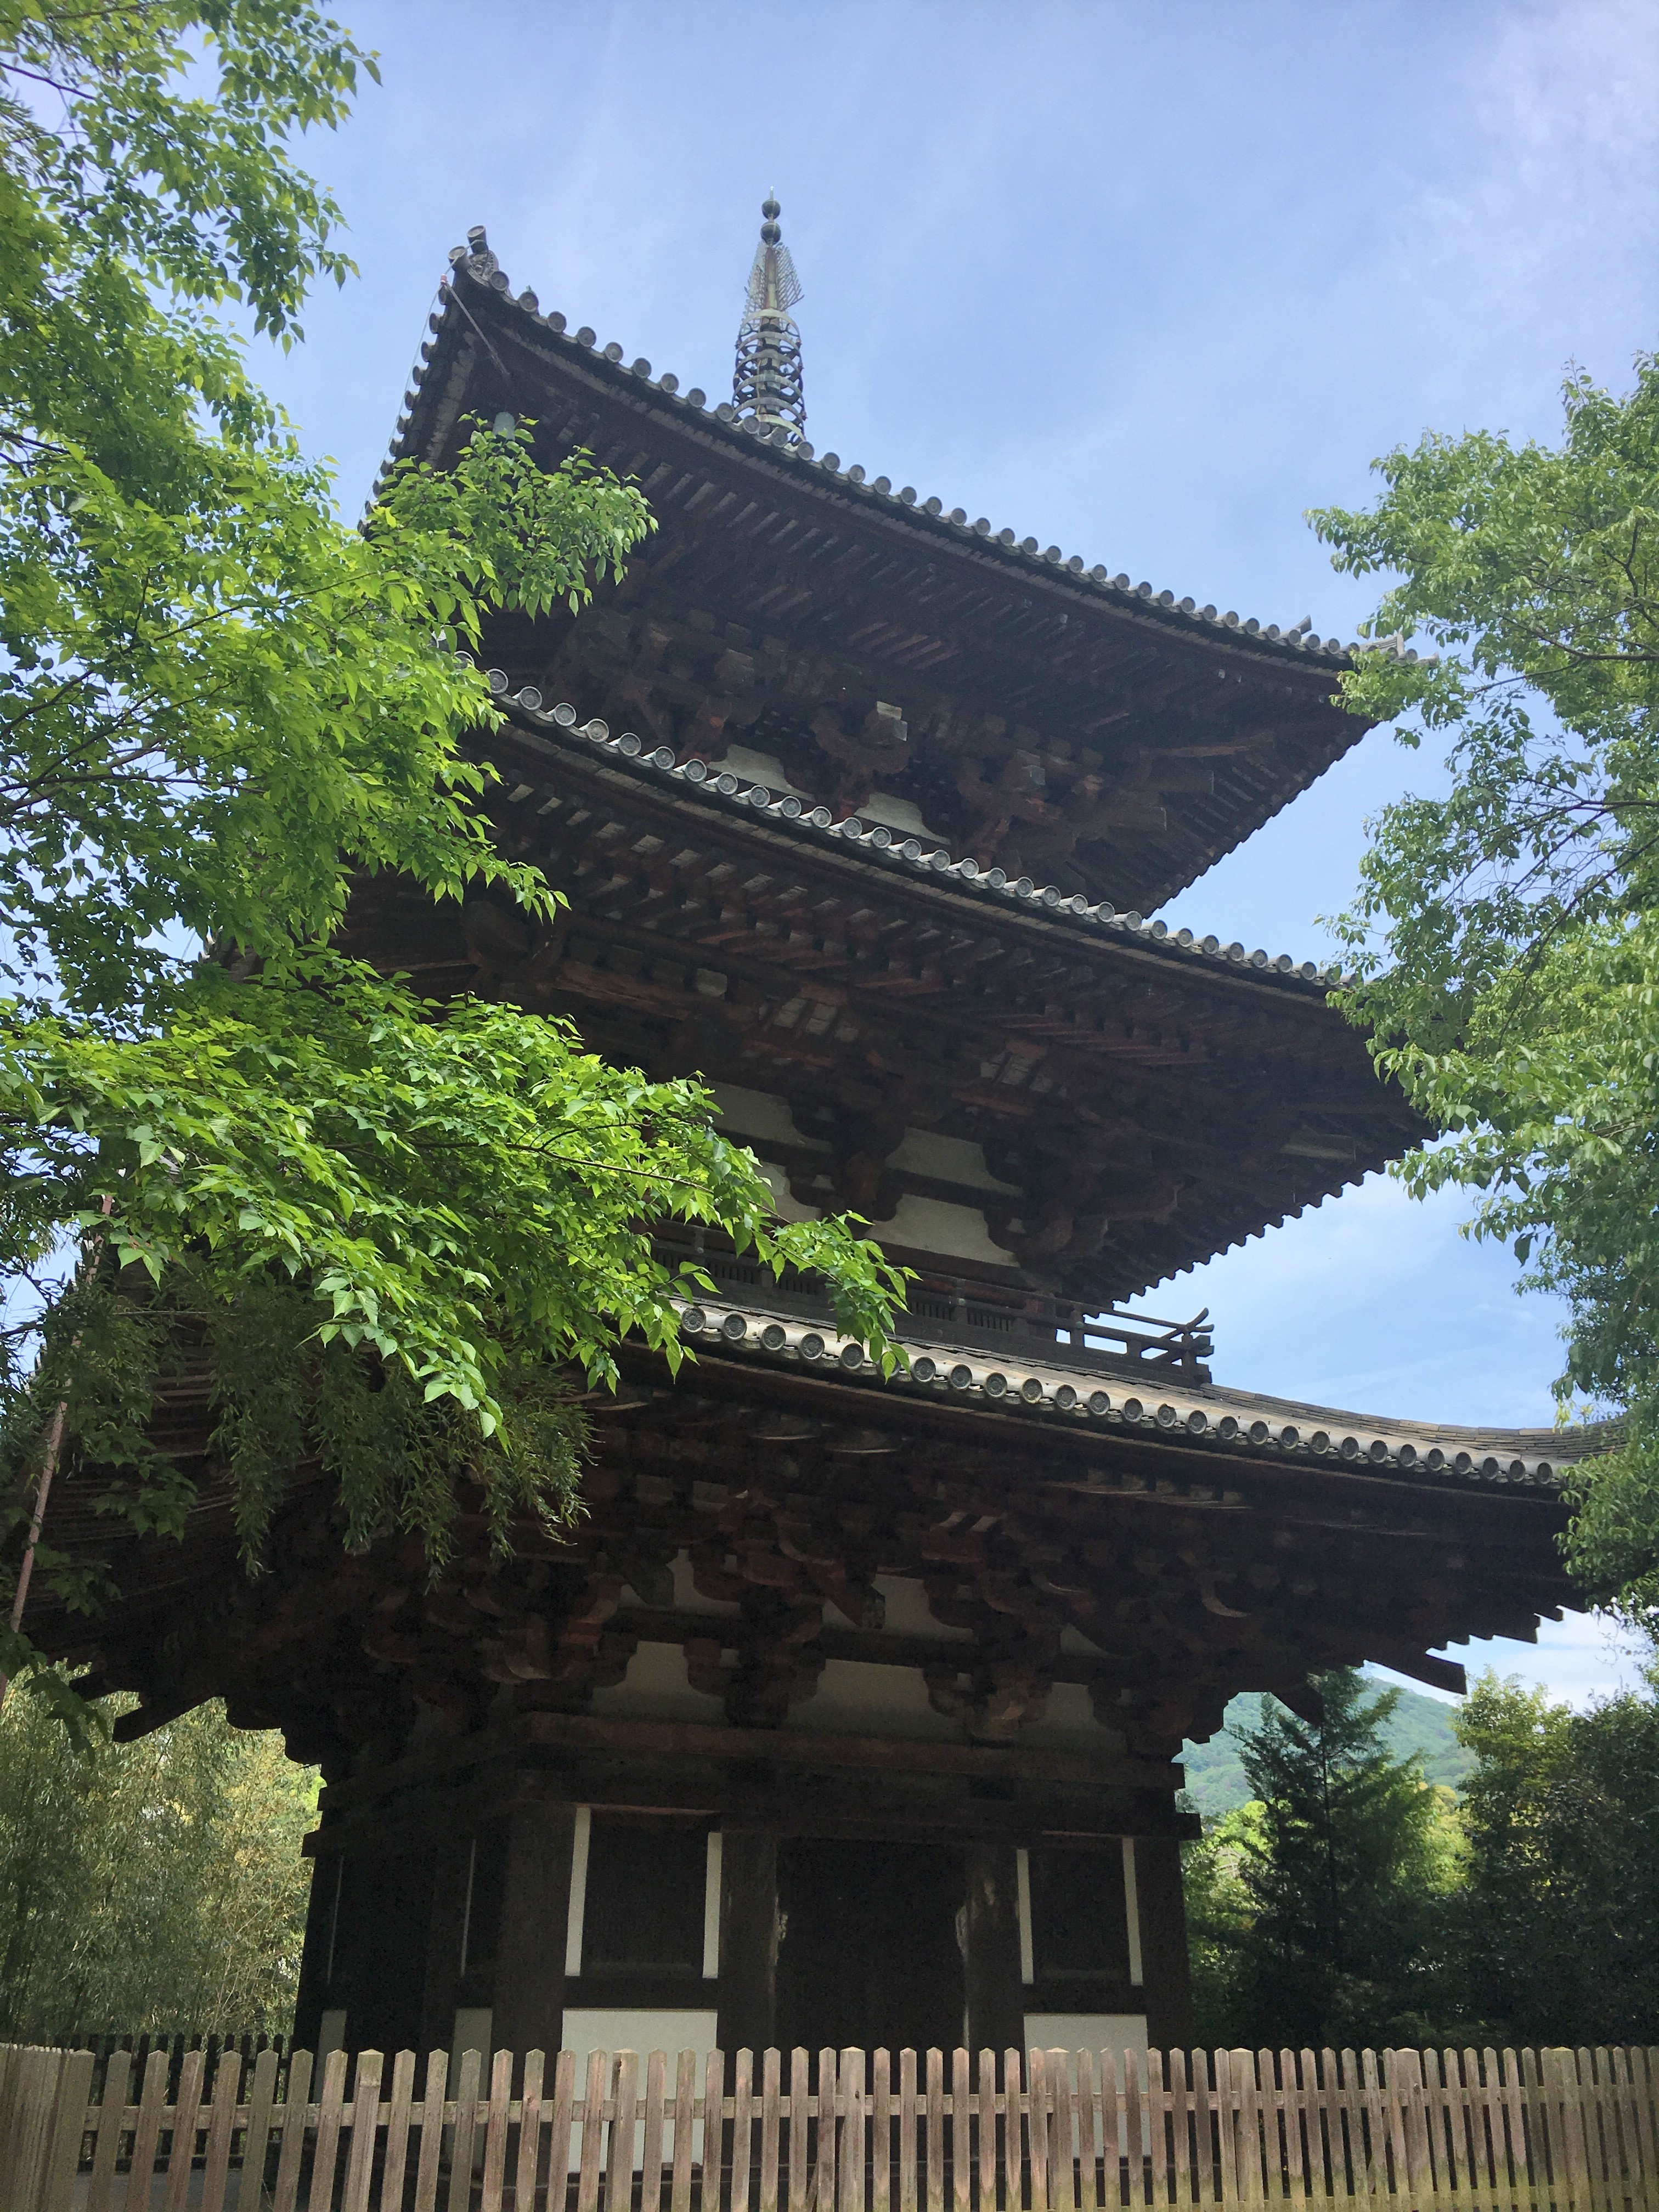 To-in pagoda of Taima-dera